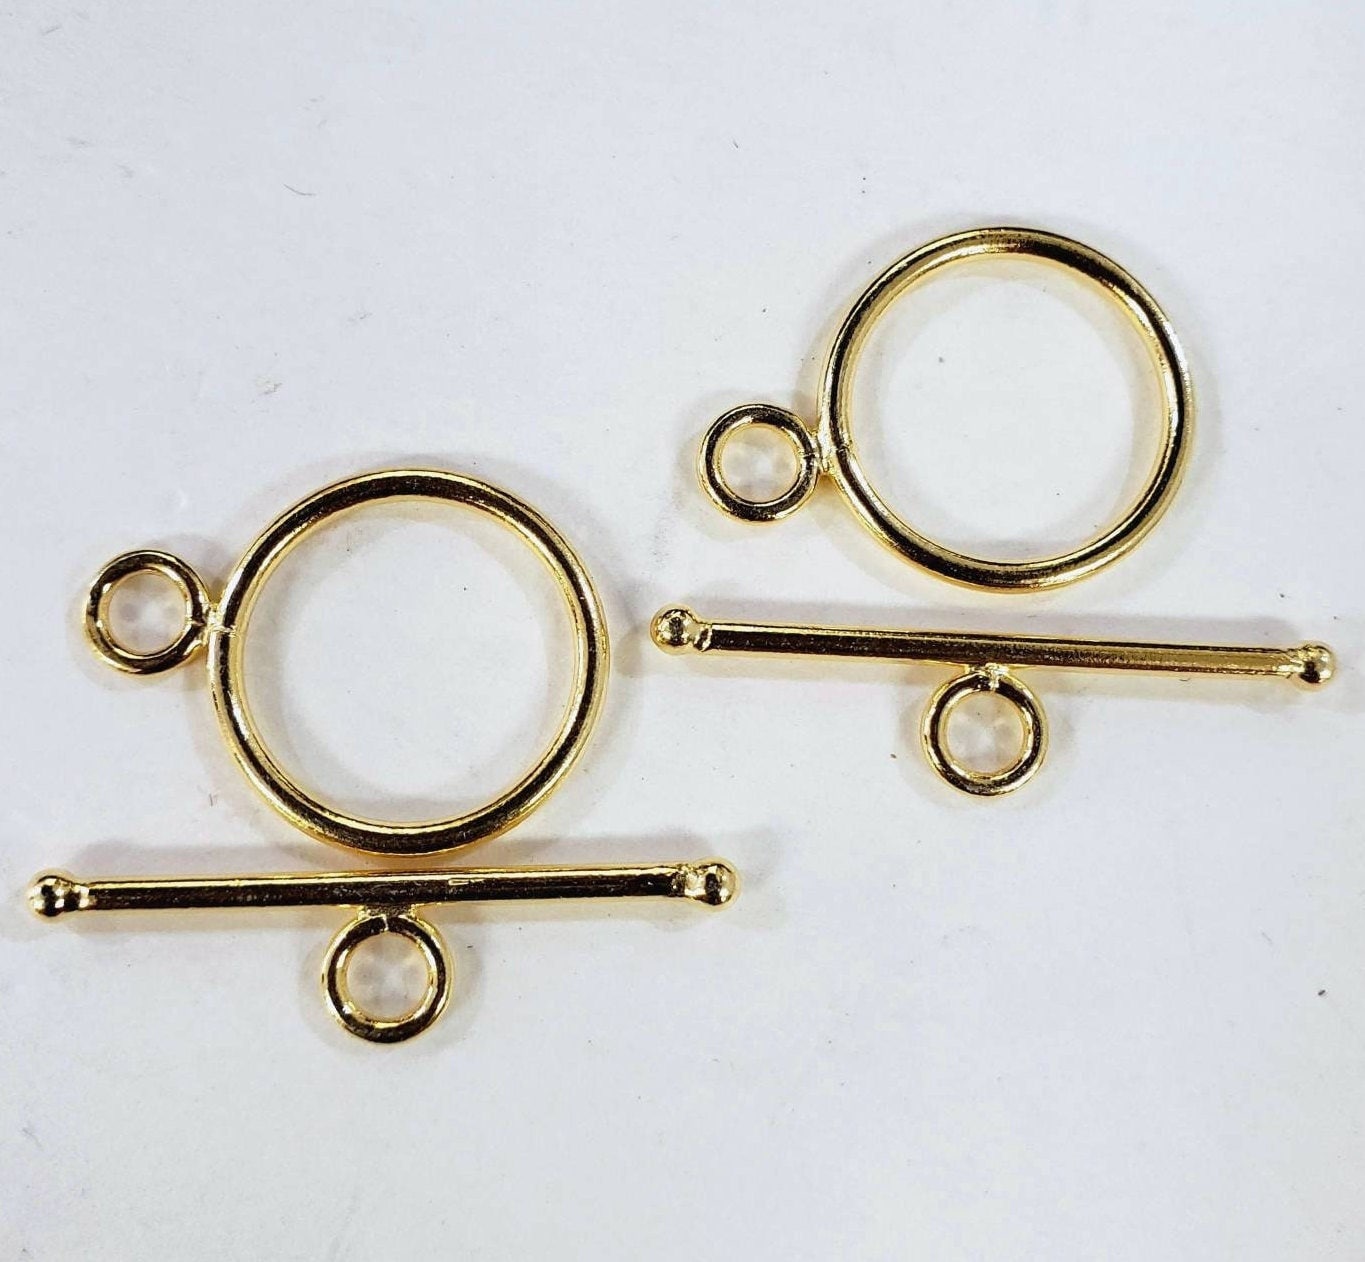 22K Gold Vermeil 925 Sterling Silver Bali toggle clasp 15mm circle & 26mm bar, bali Handmade clasp , 1 set or bulk